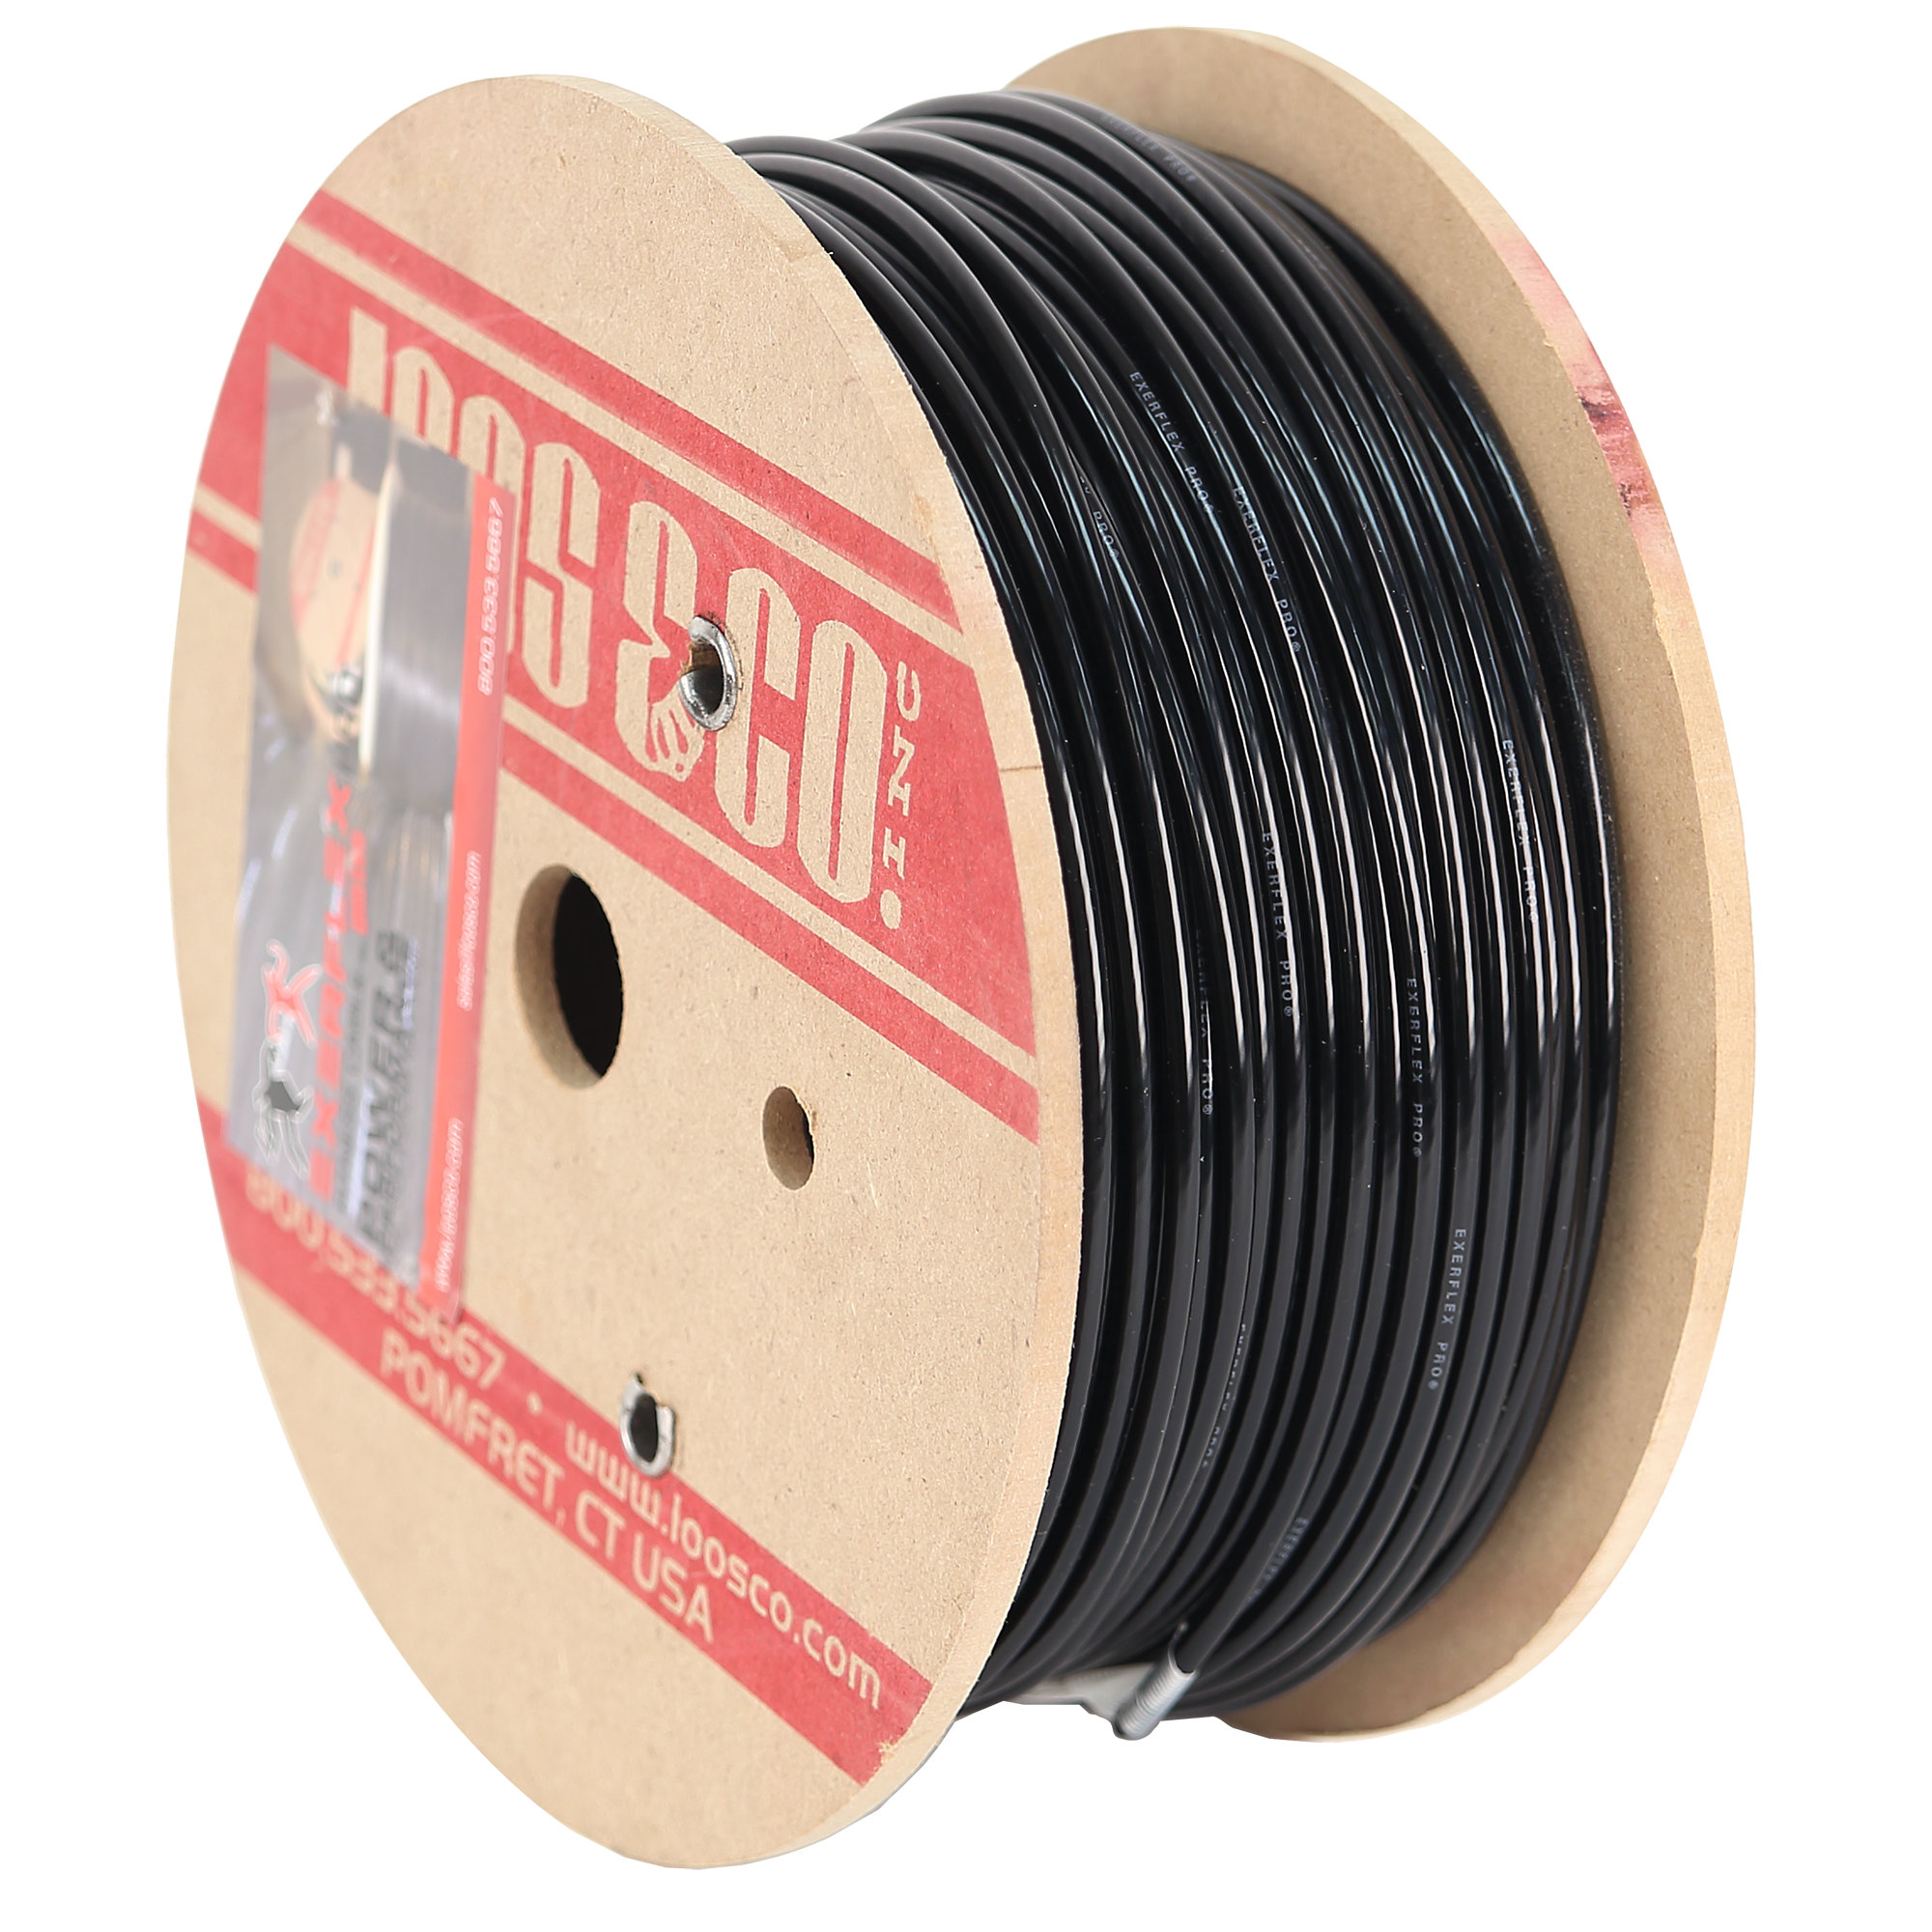  Exerflex Pro Cable, 3/16", Black Nylon Coating | 300 Foot Reel 